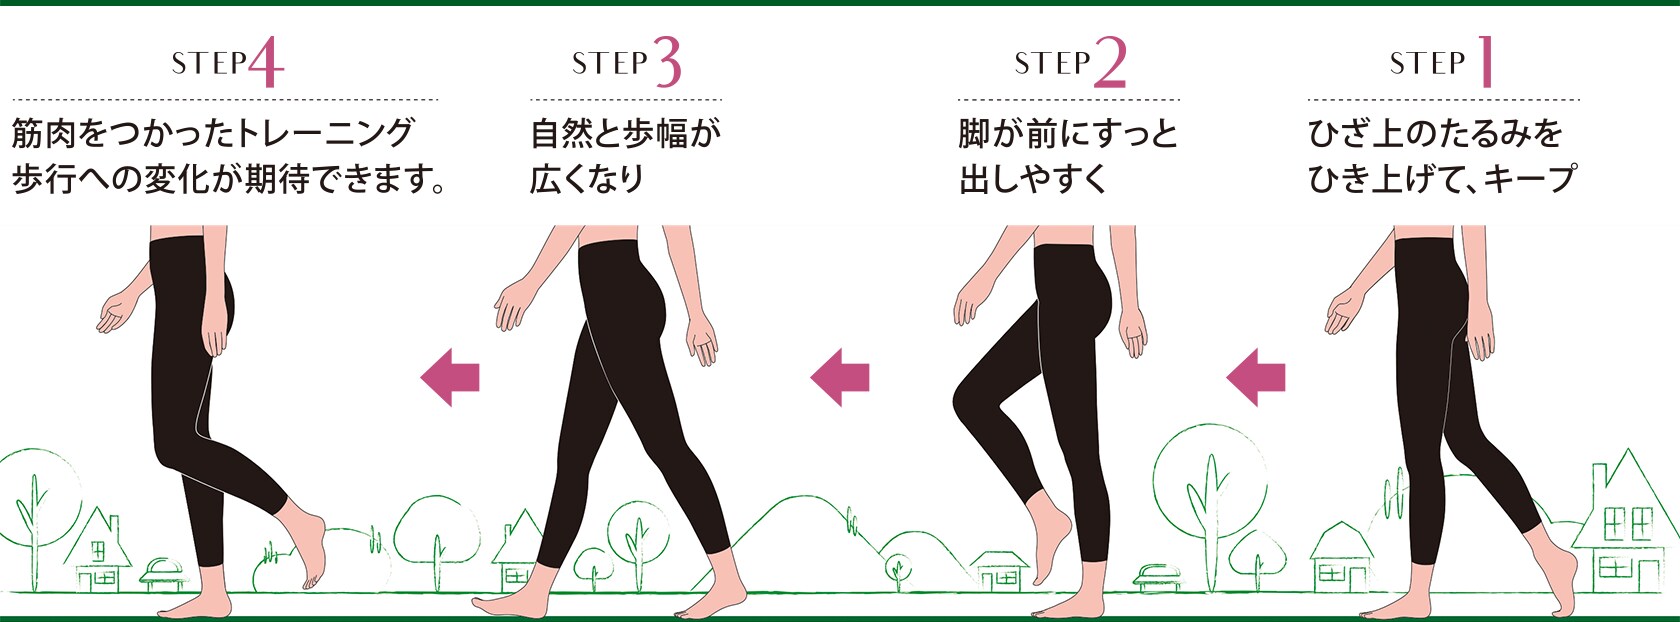 STEP1 ひざ上のたるみを引き上げて、キープ STEP2 脚が前にすっと出しやすく STEP3 自然と歩幅が広くなり STEP4 筋肉をつかったトレーニング歩行への変化が期待できます。